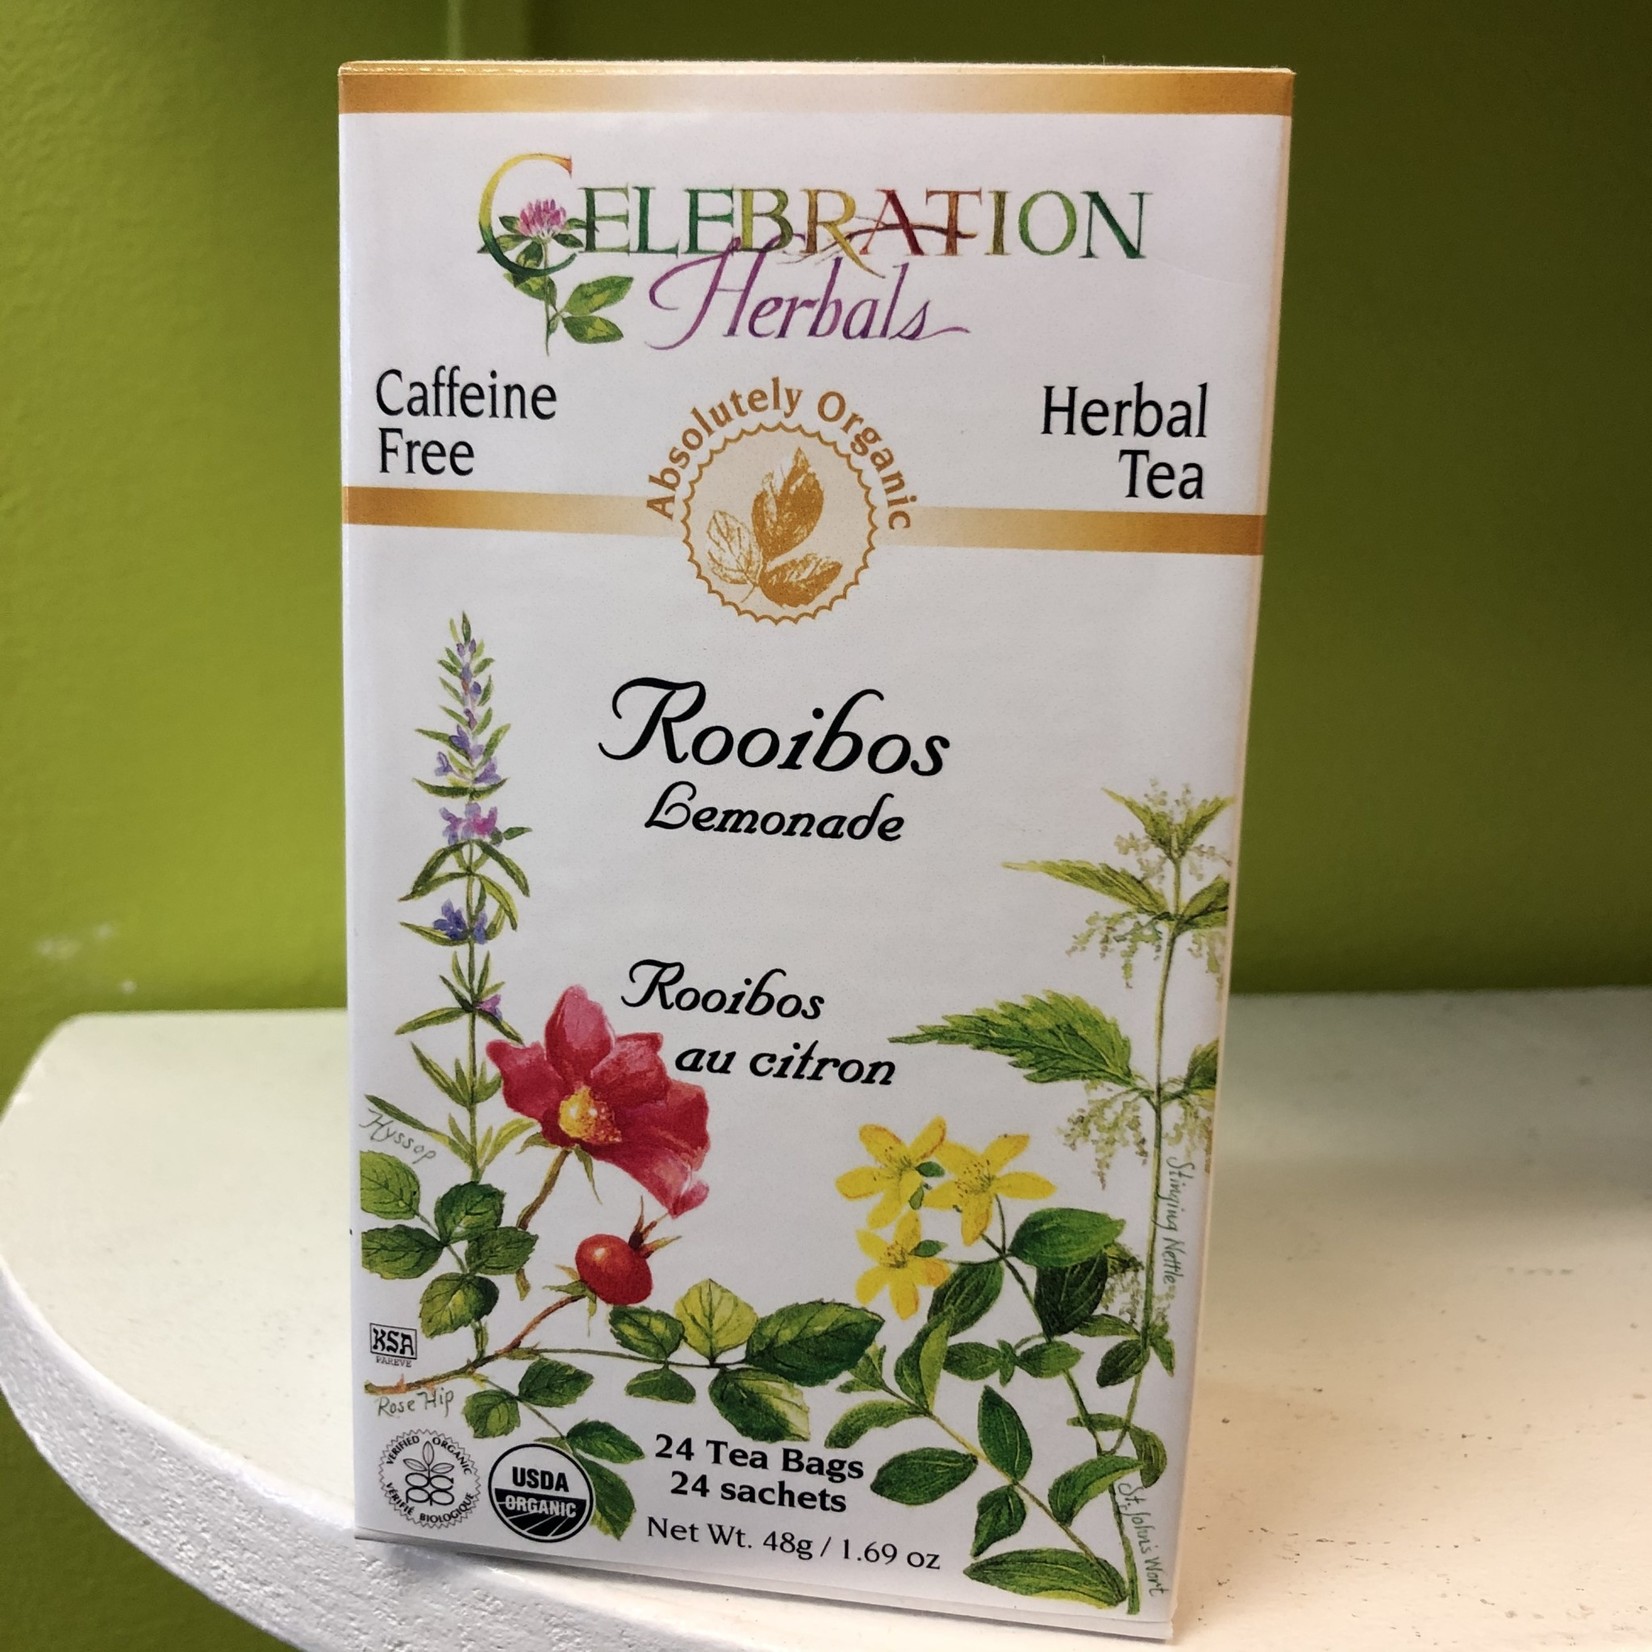 Celebration Herbals Celebration Herbals Rooibos Lemonade 24 Tea Bags